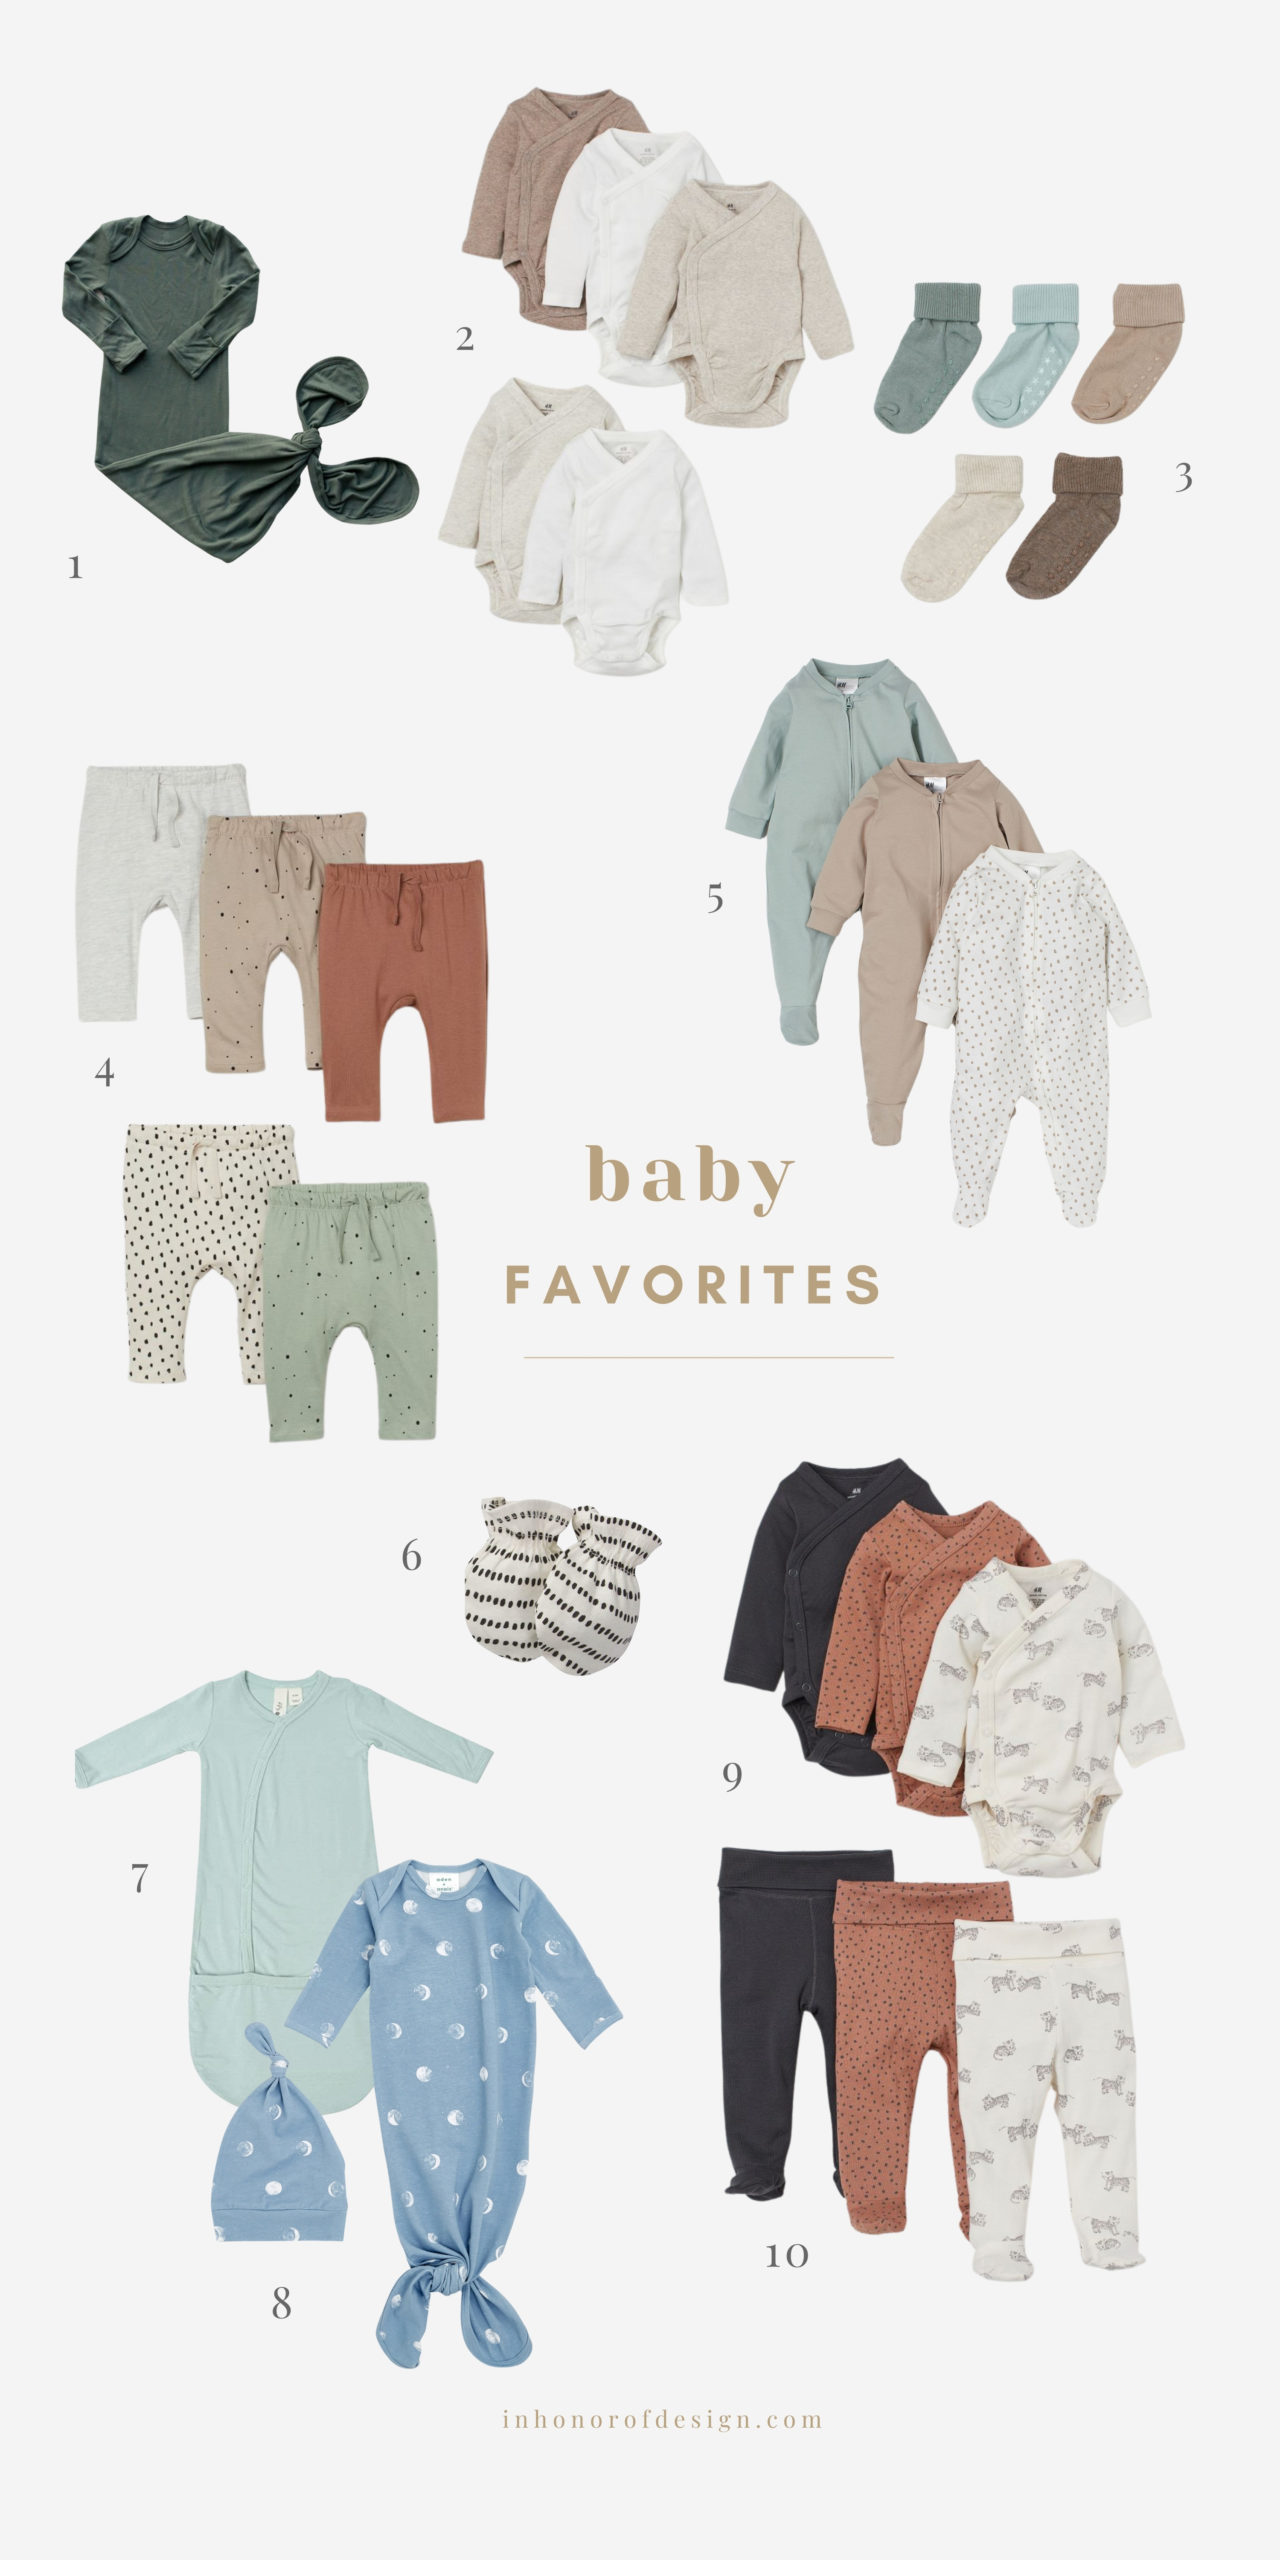 https://inhonorofdesign.com/wp-content/uploads/2021/07/Newborn-baby-boy-clothes-scaled.jpg